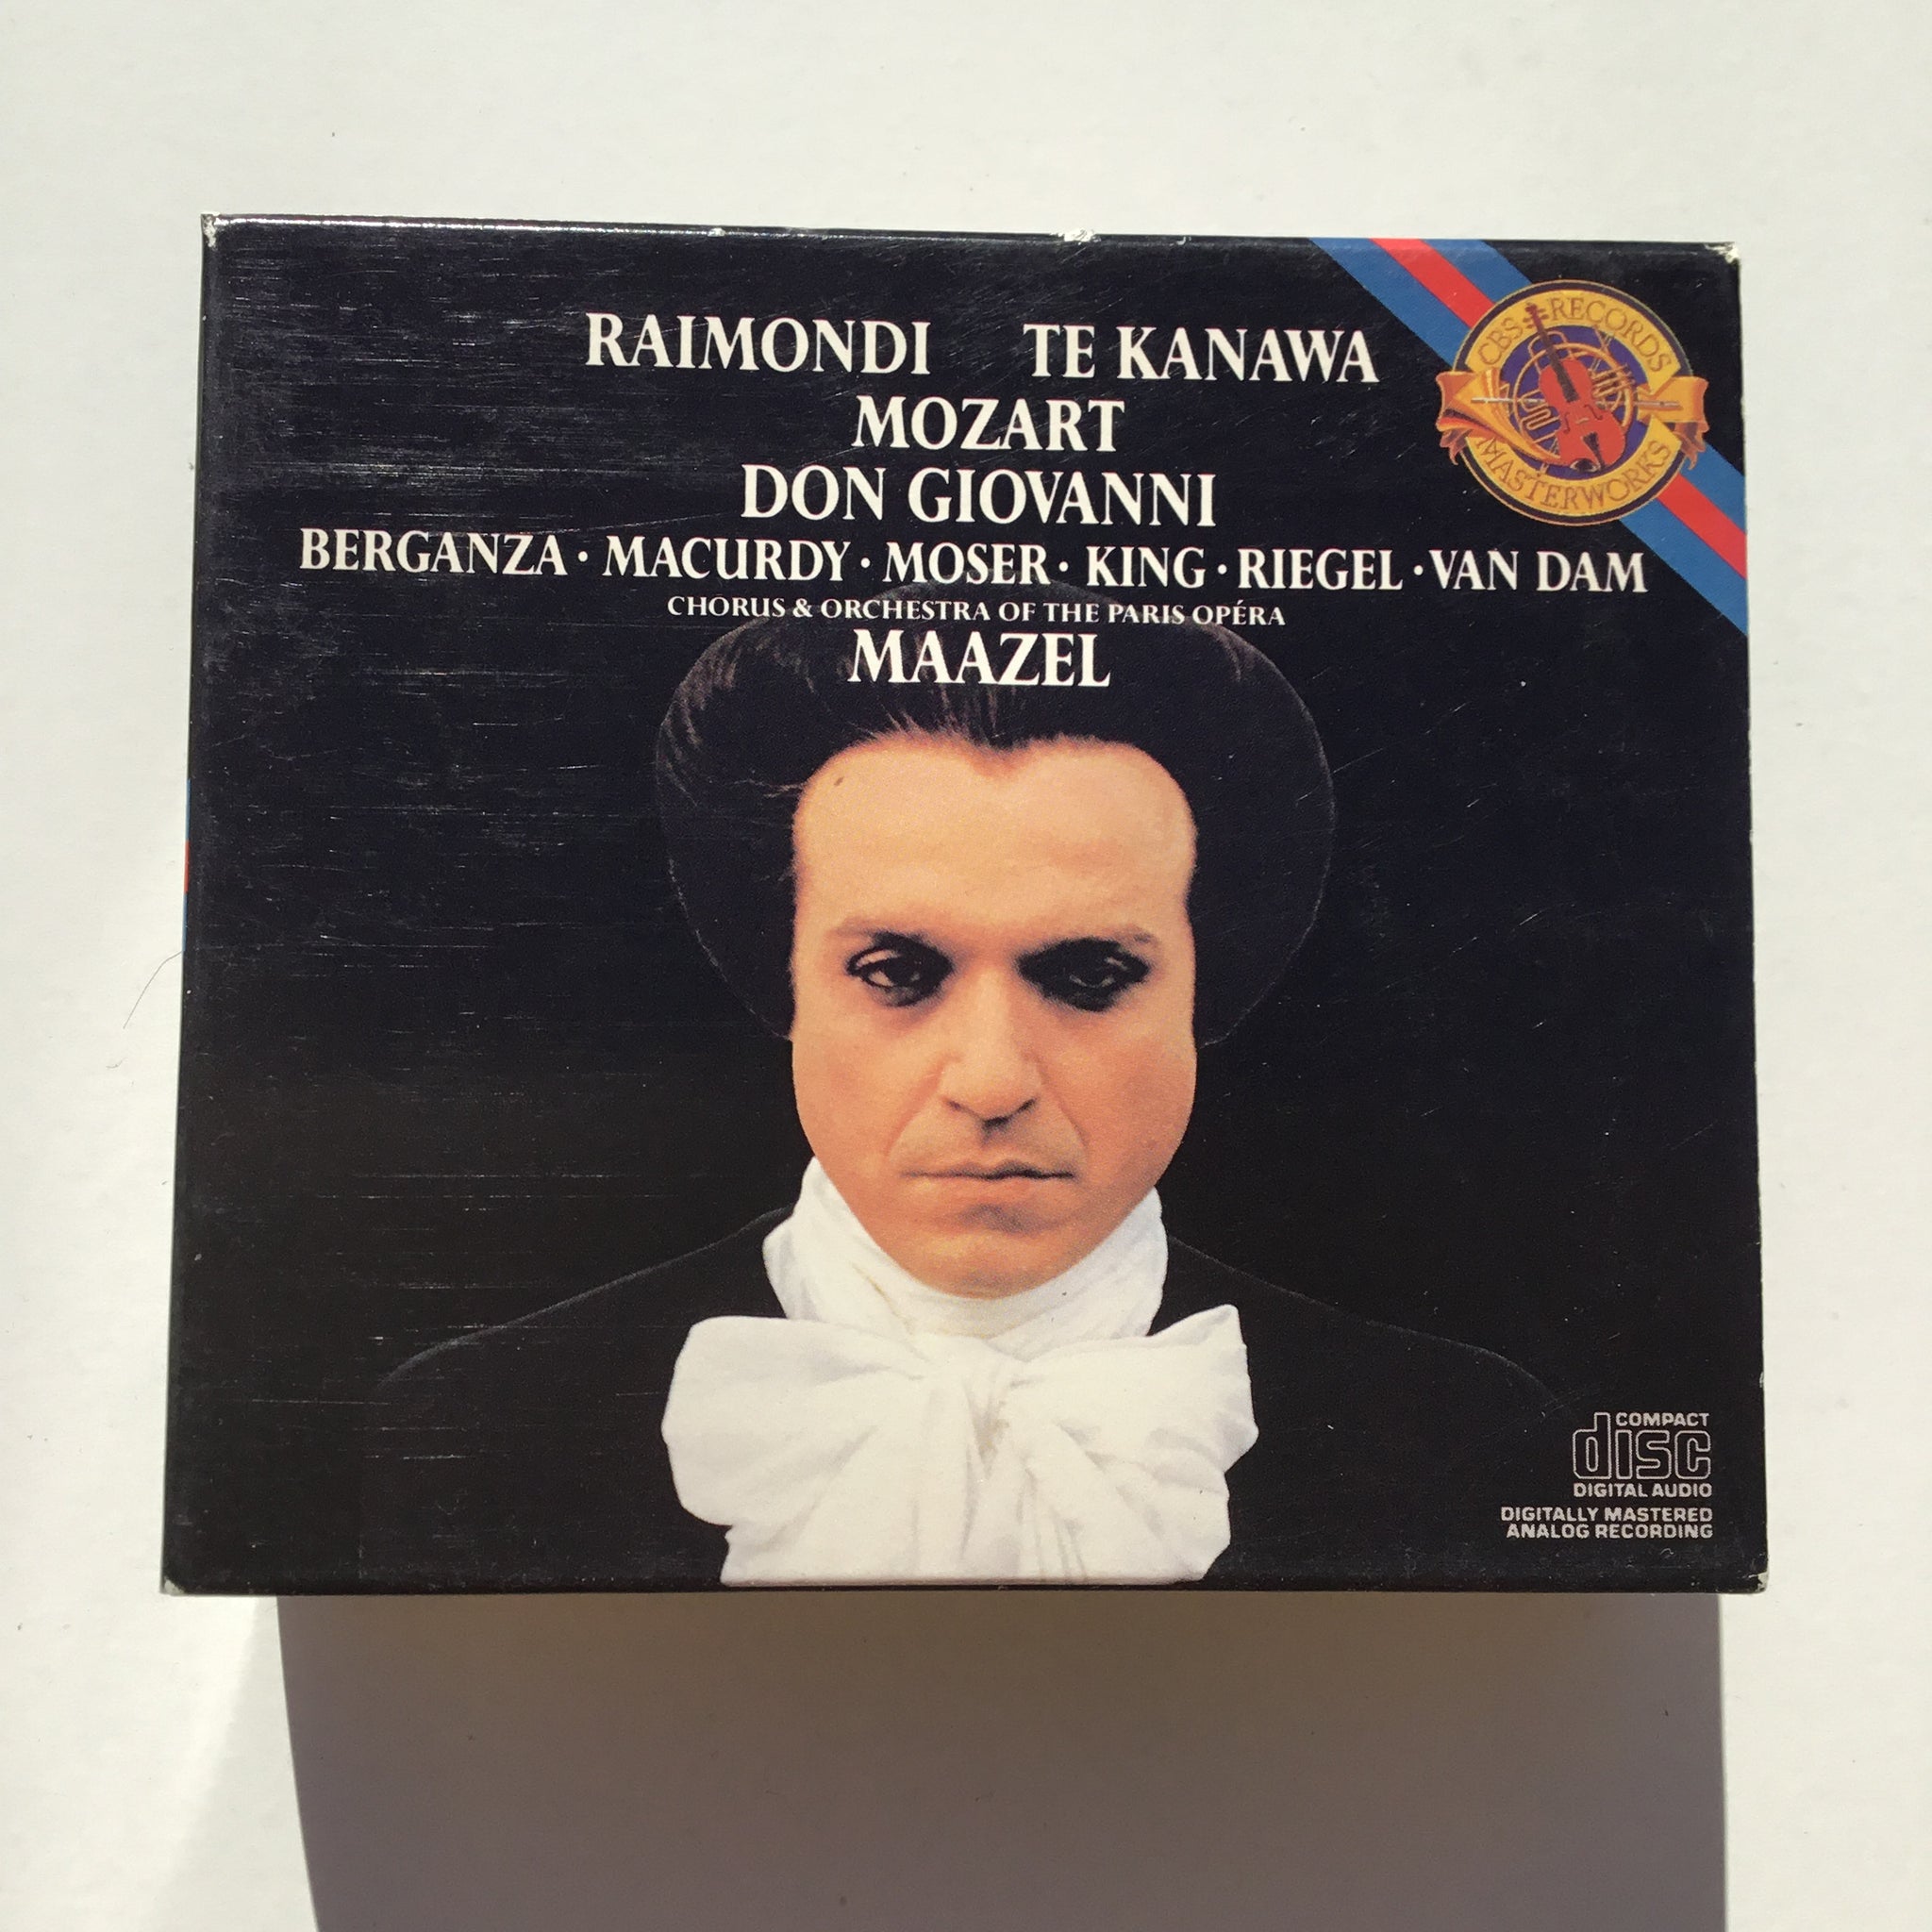 Wolfgang Amadeus Mozart—Don Giovanni (CBS Masterworks) 2xCD Set